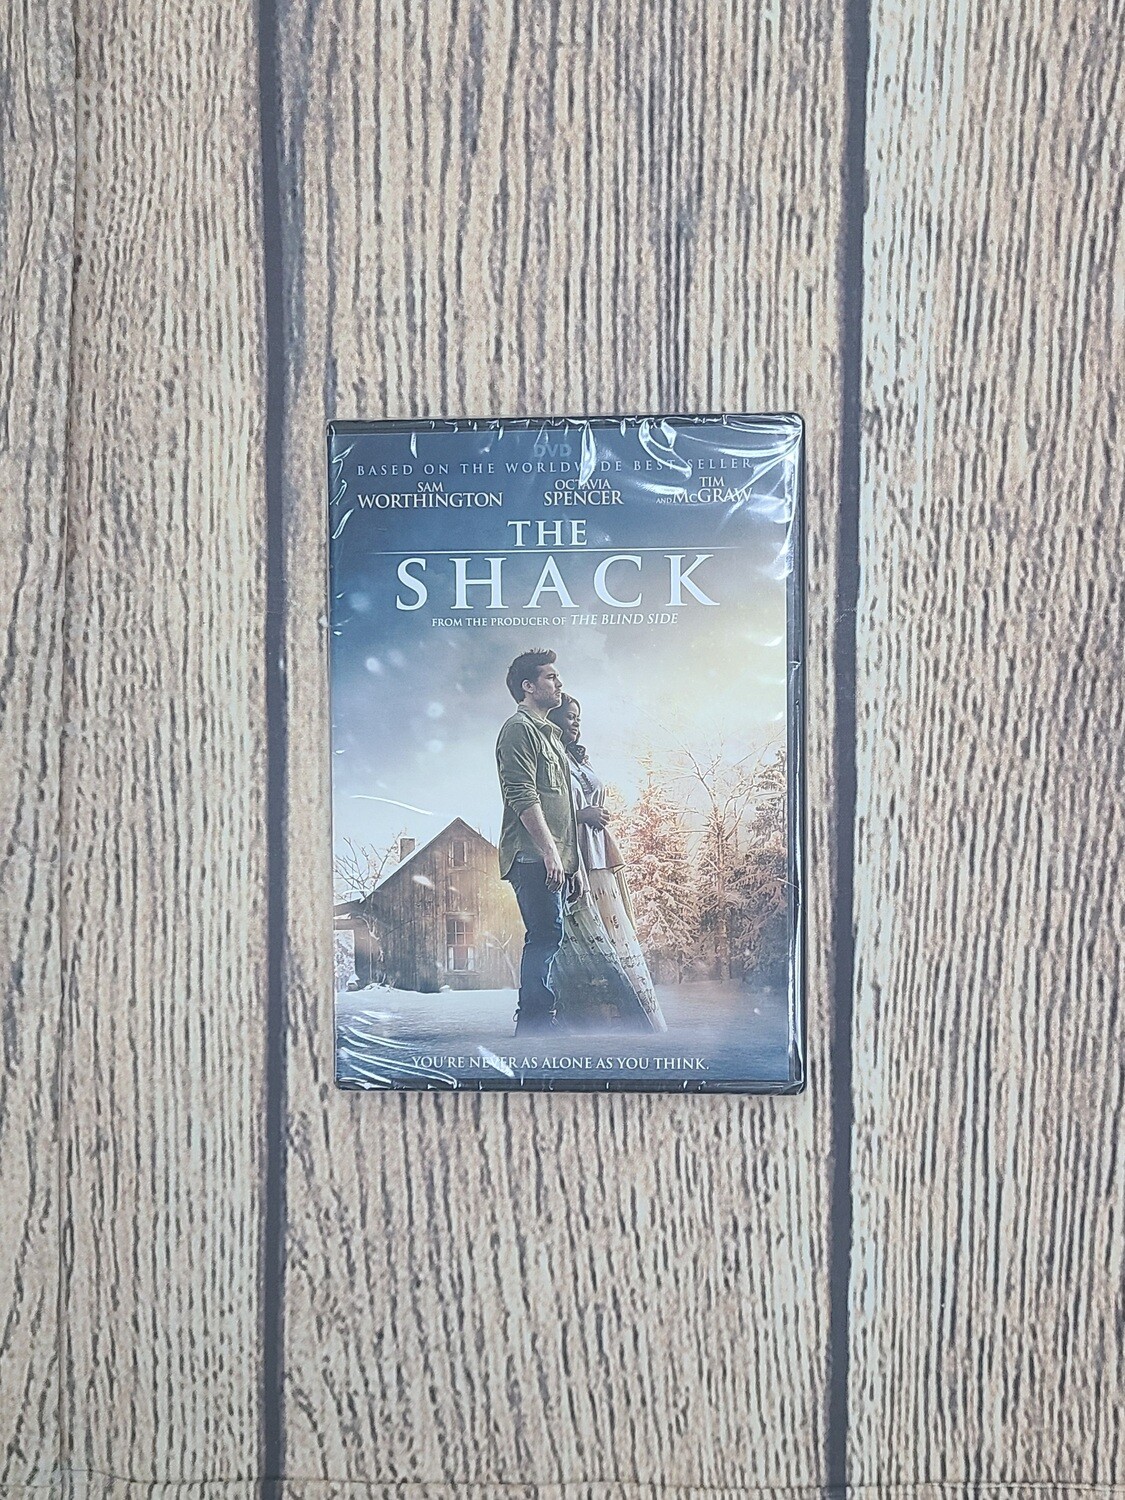 The Shack - DVD